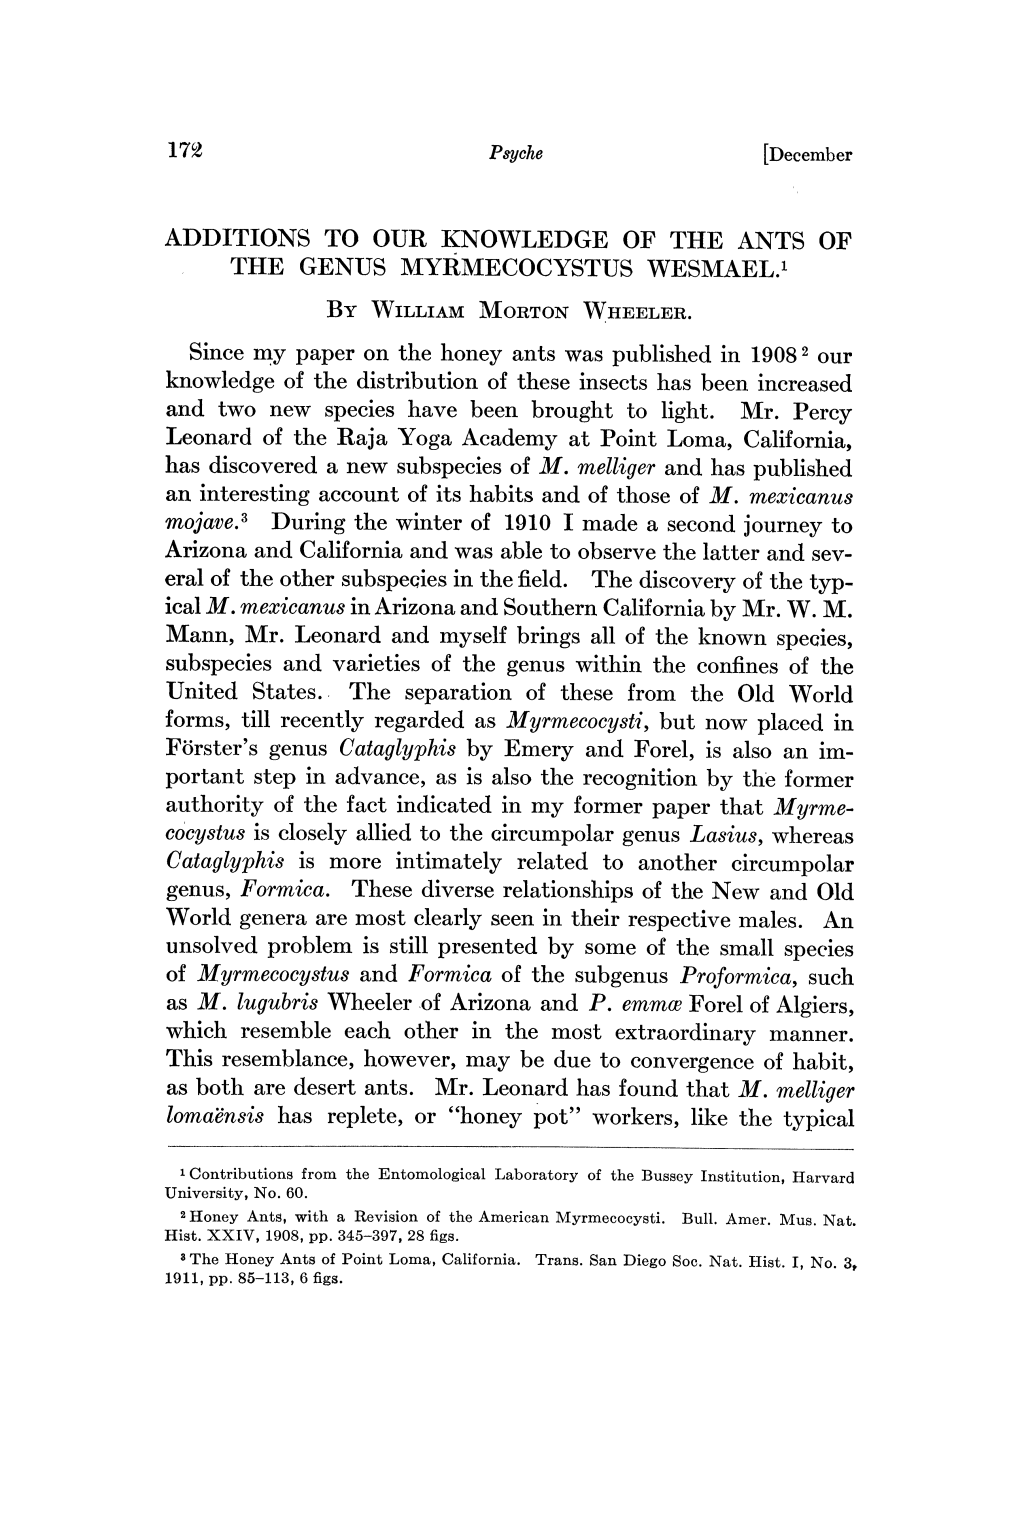 The Genus Myrmecocystus Wesmael. by William Morton Wheeler